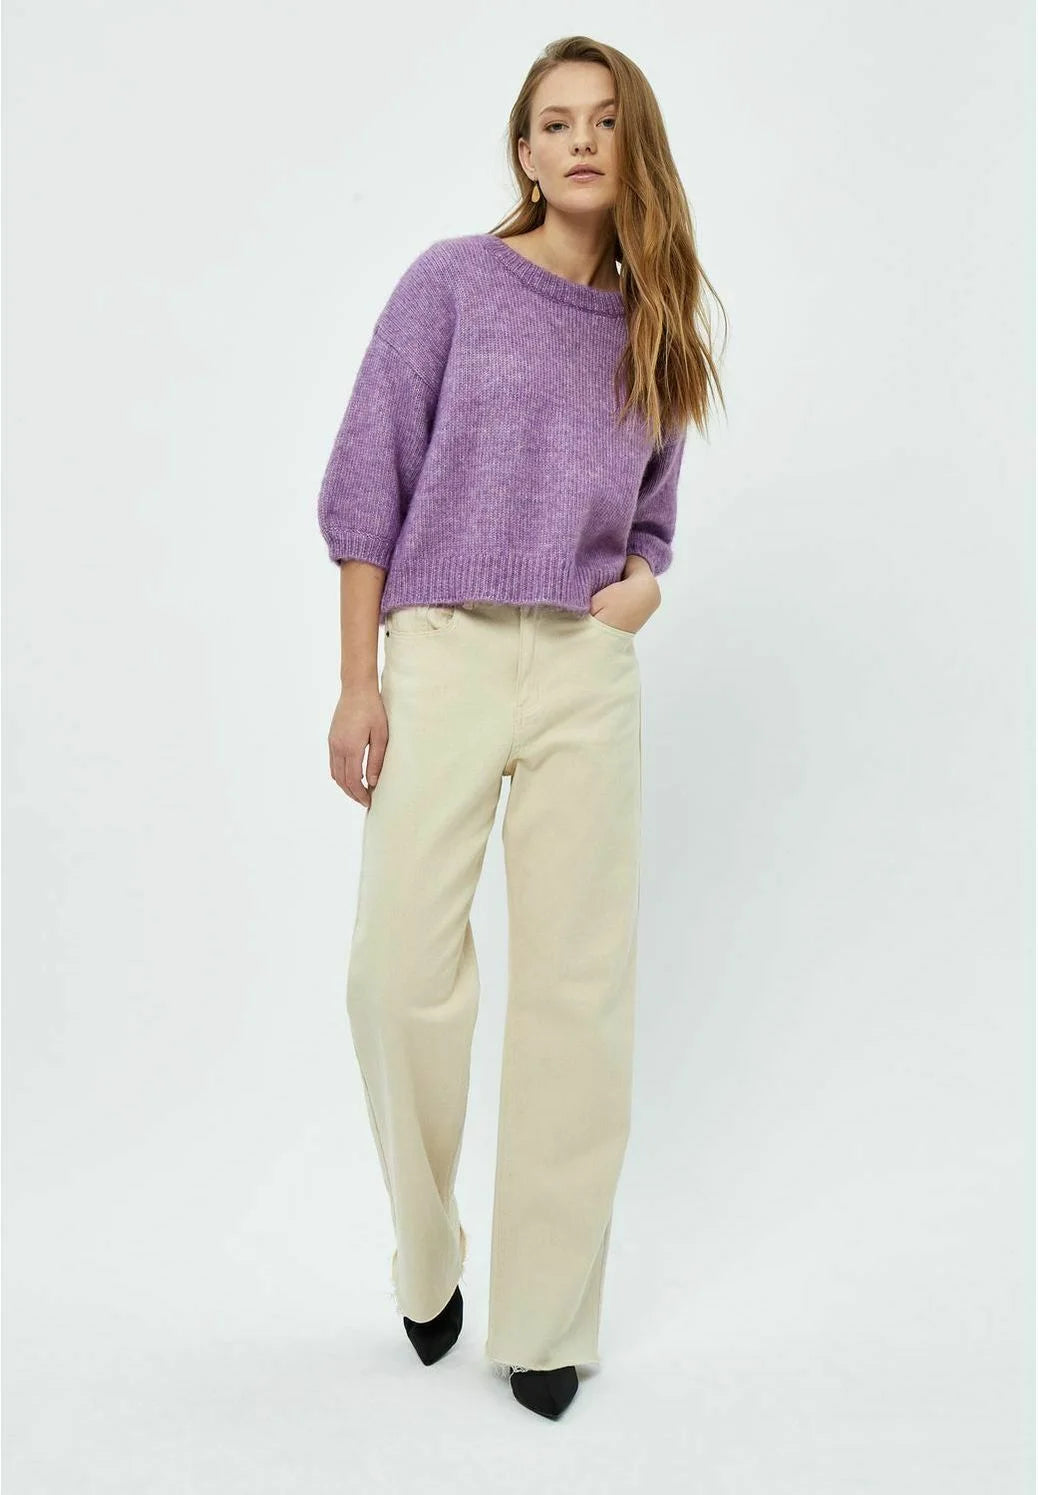 korte paarse trui met driekwarts mouwen - peppercorn - - grote maten - dameskleding - kledingwinkel - herent - leuven